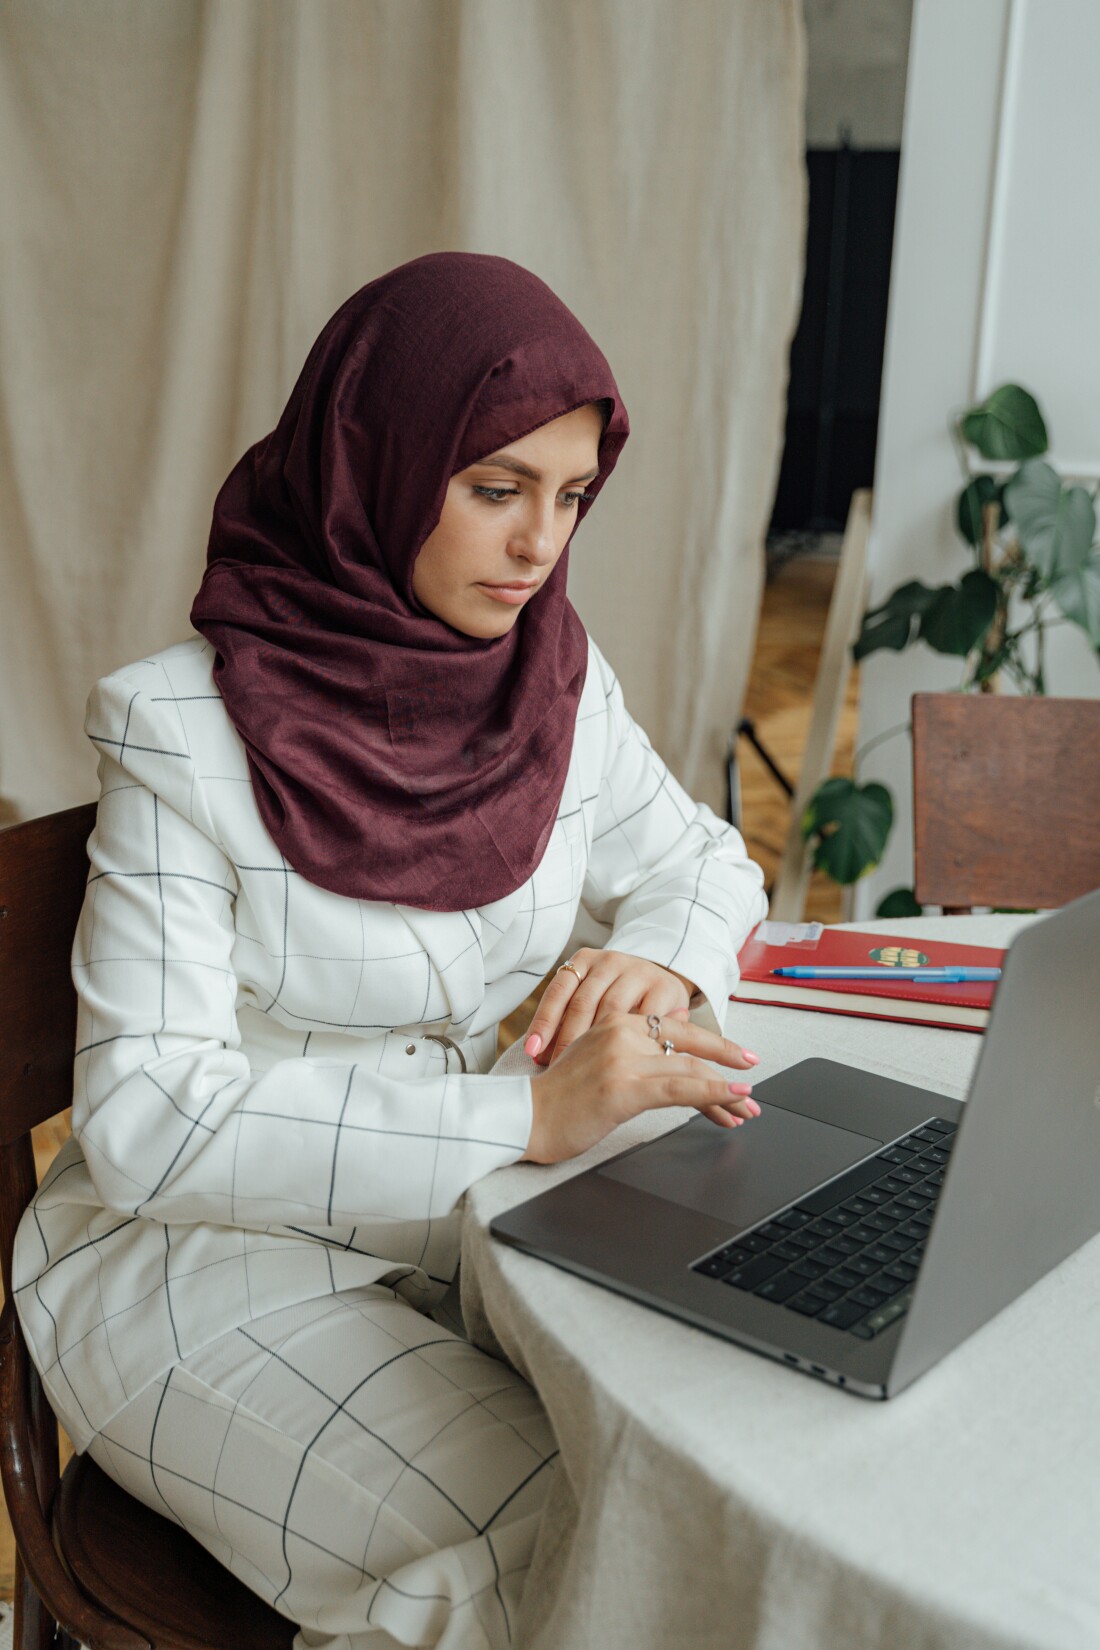 Woman at work wearing hijab